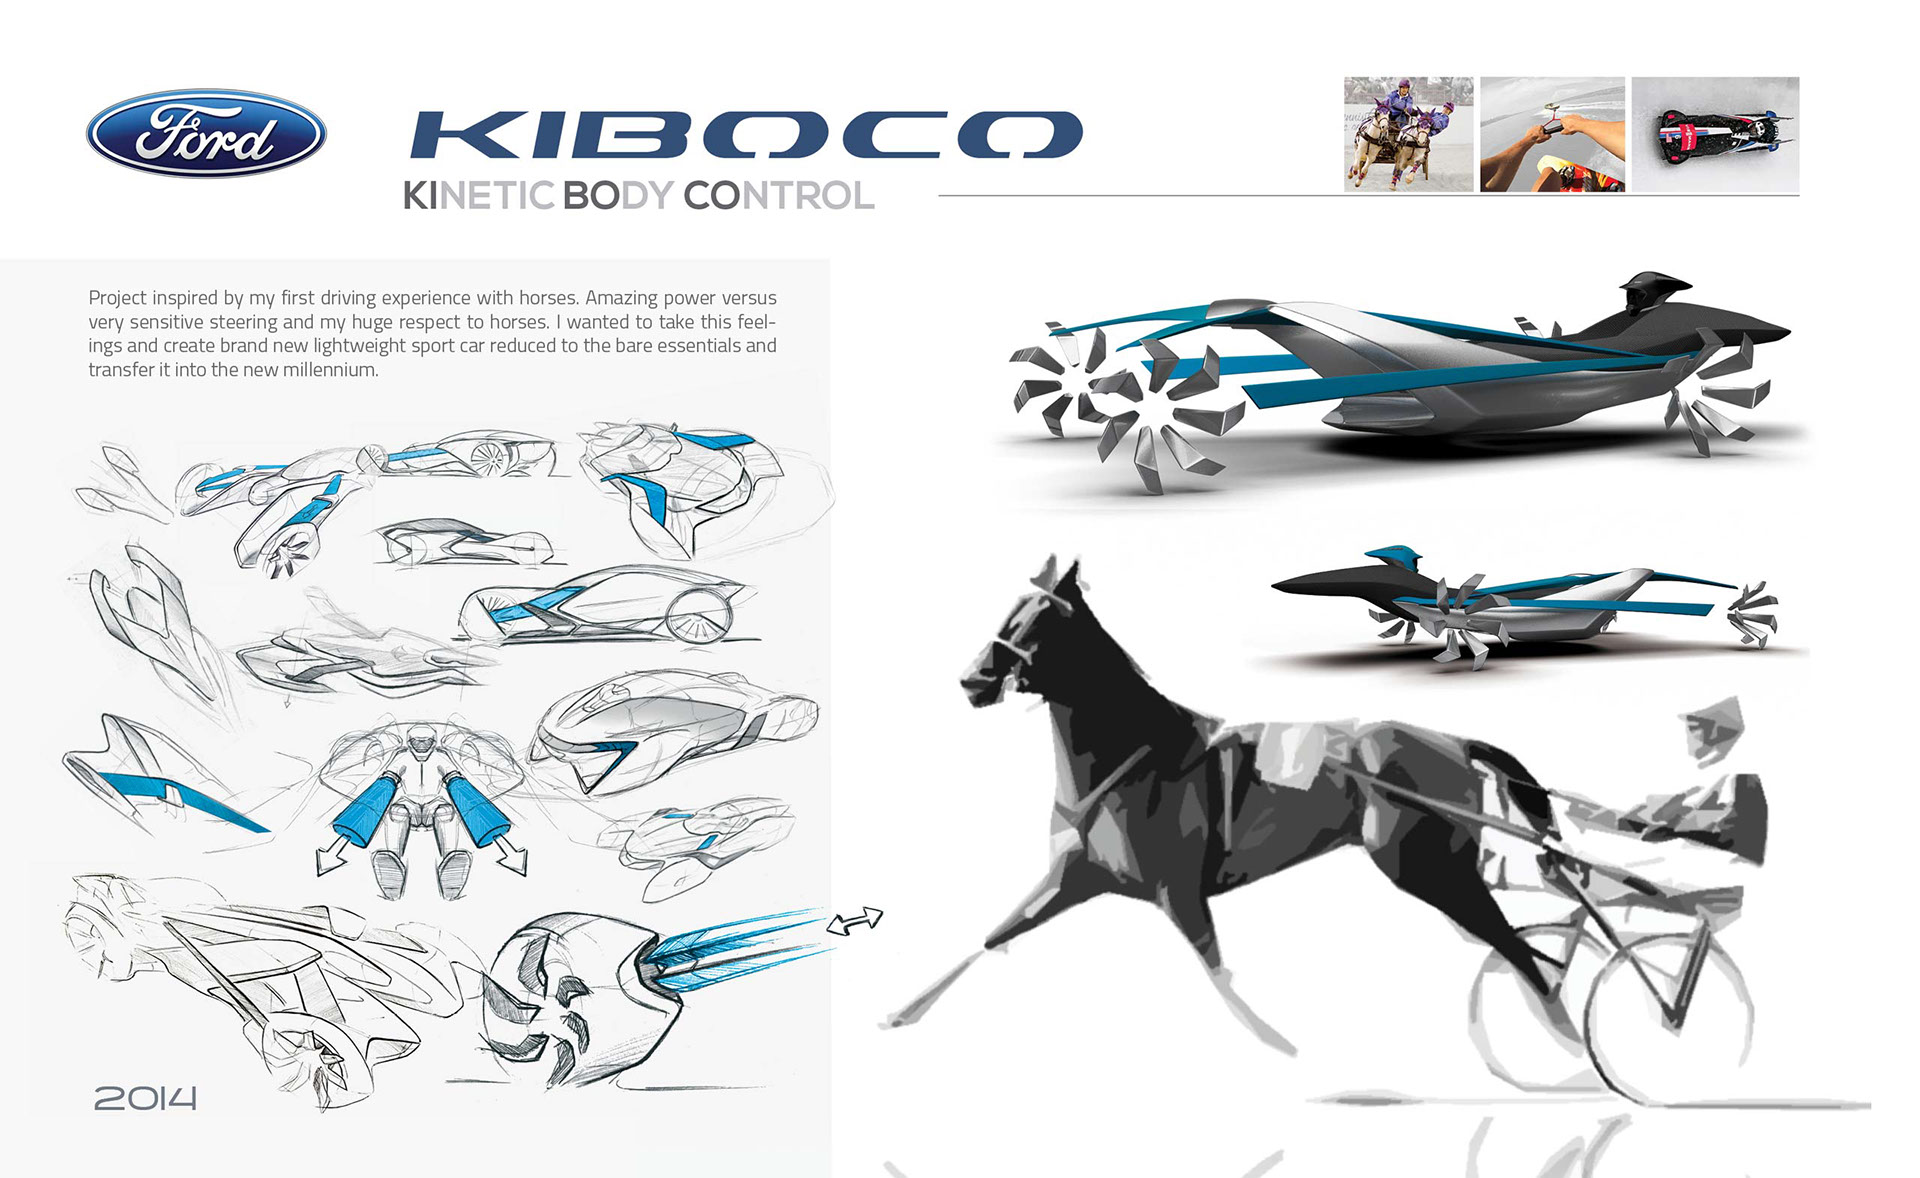 Ford Kiboco - Concept vehicle - design by MMelicharek